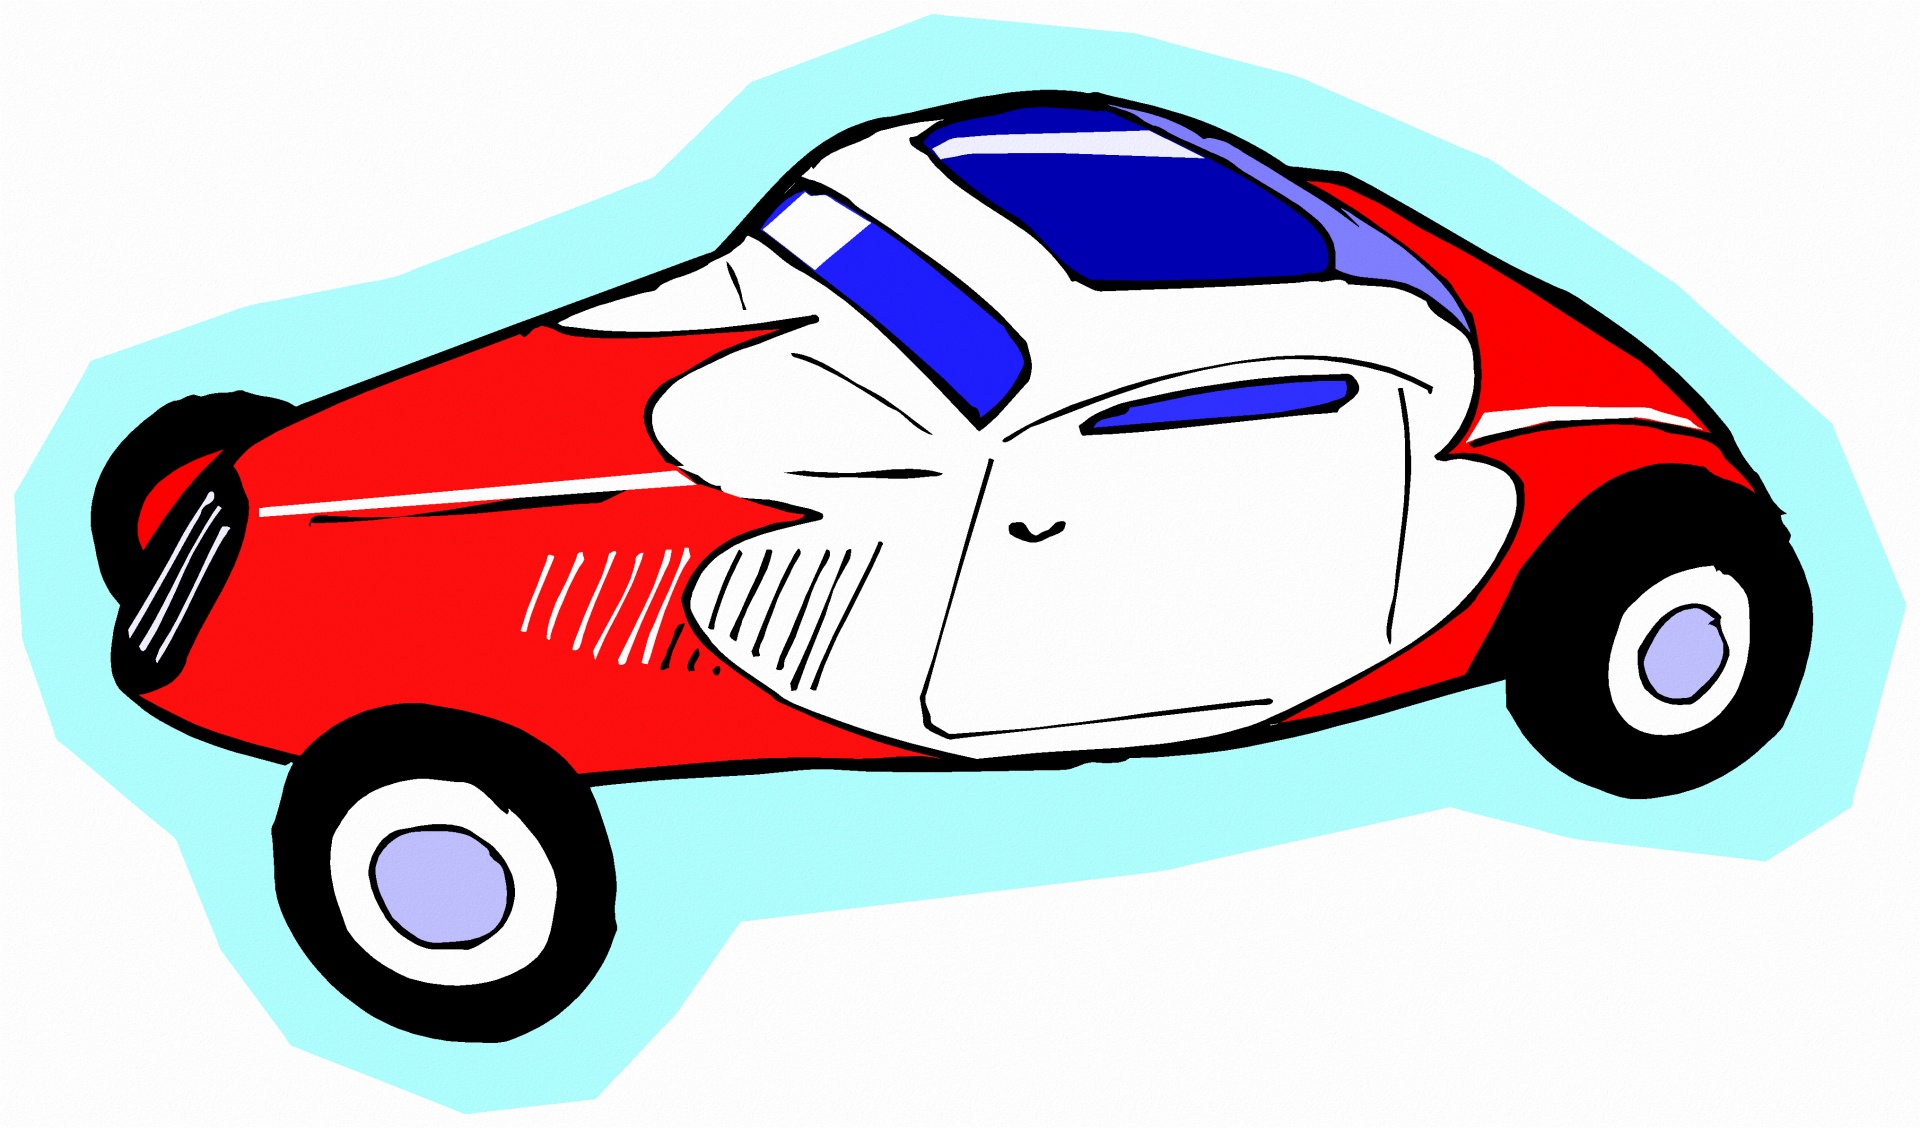 Sketch of a racer